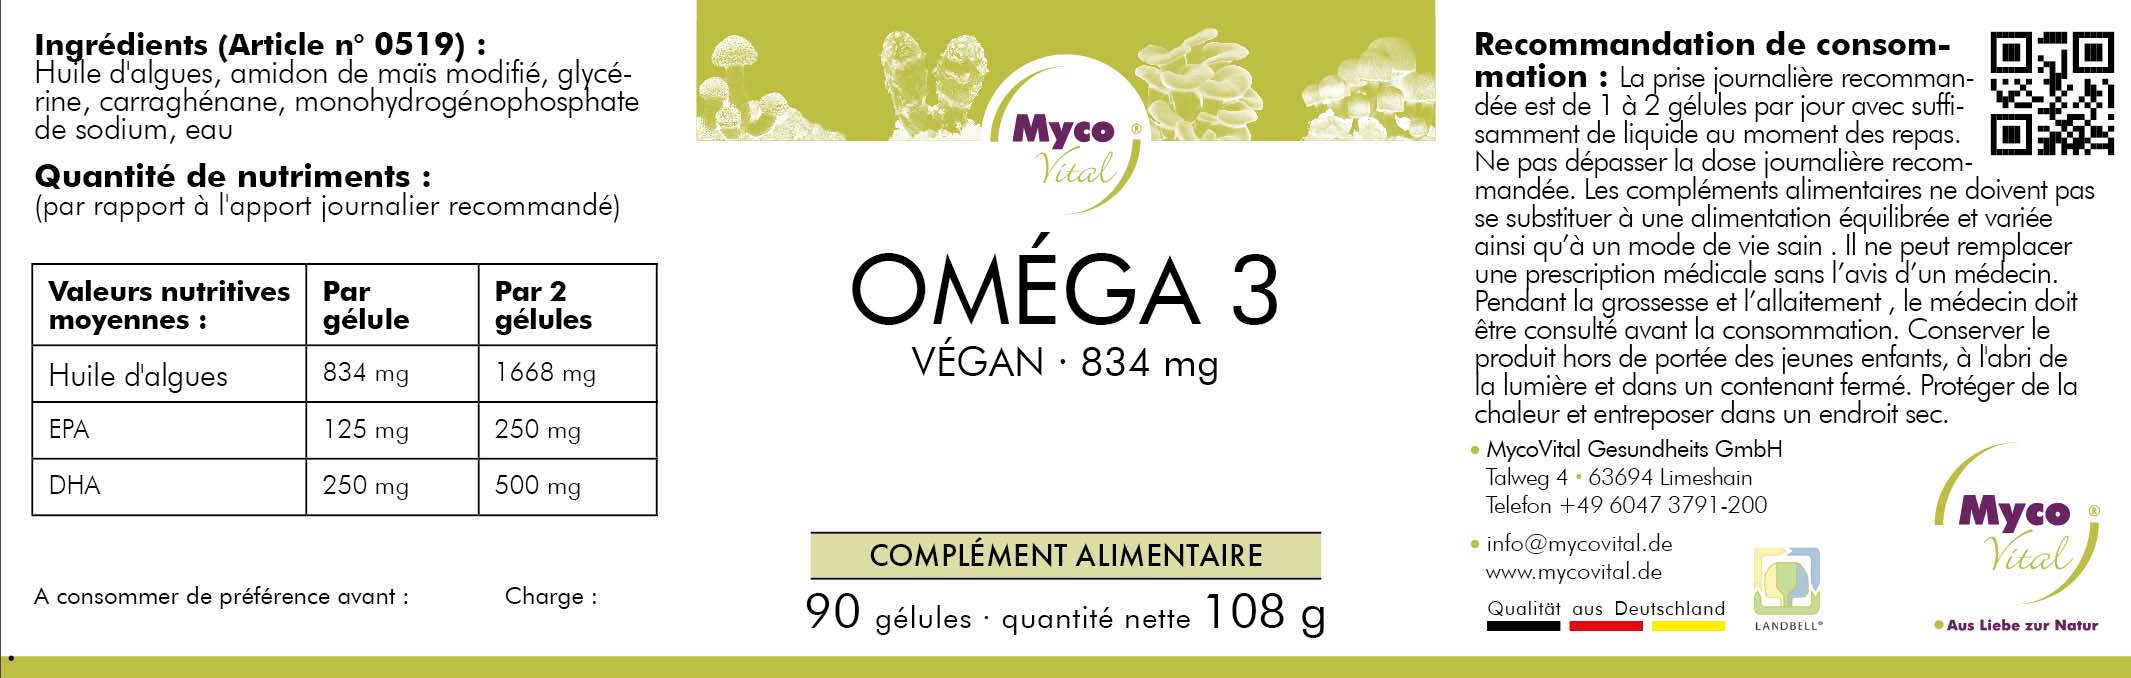 MycoVital Omega 3 VEG algues 834 mg